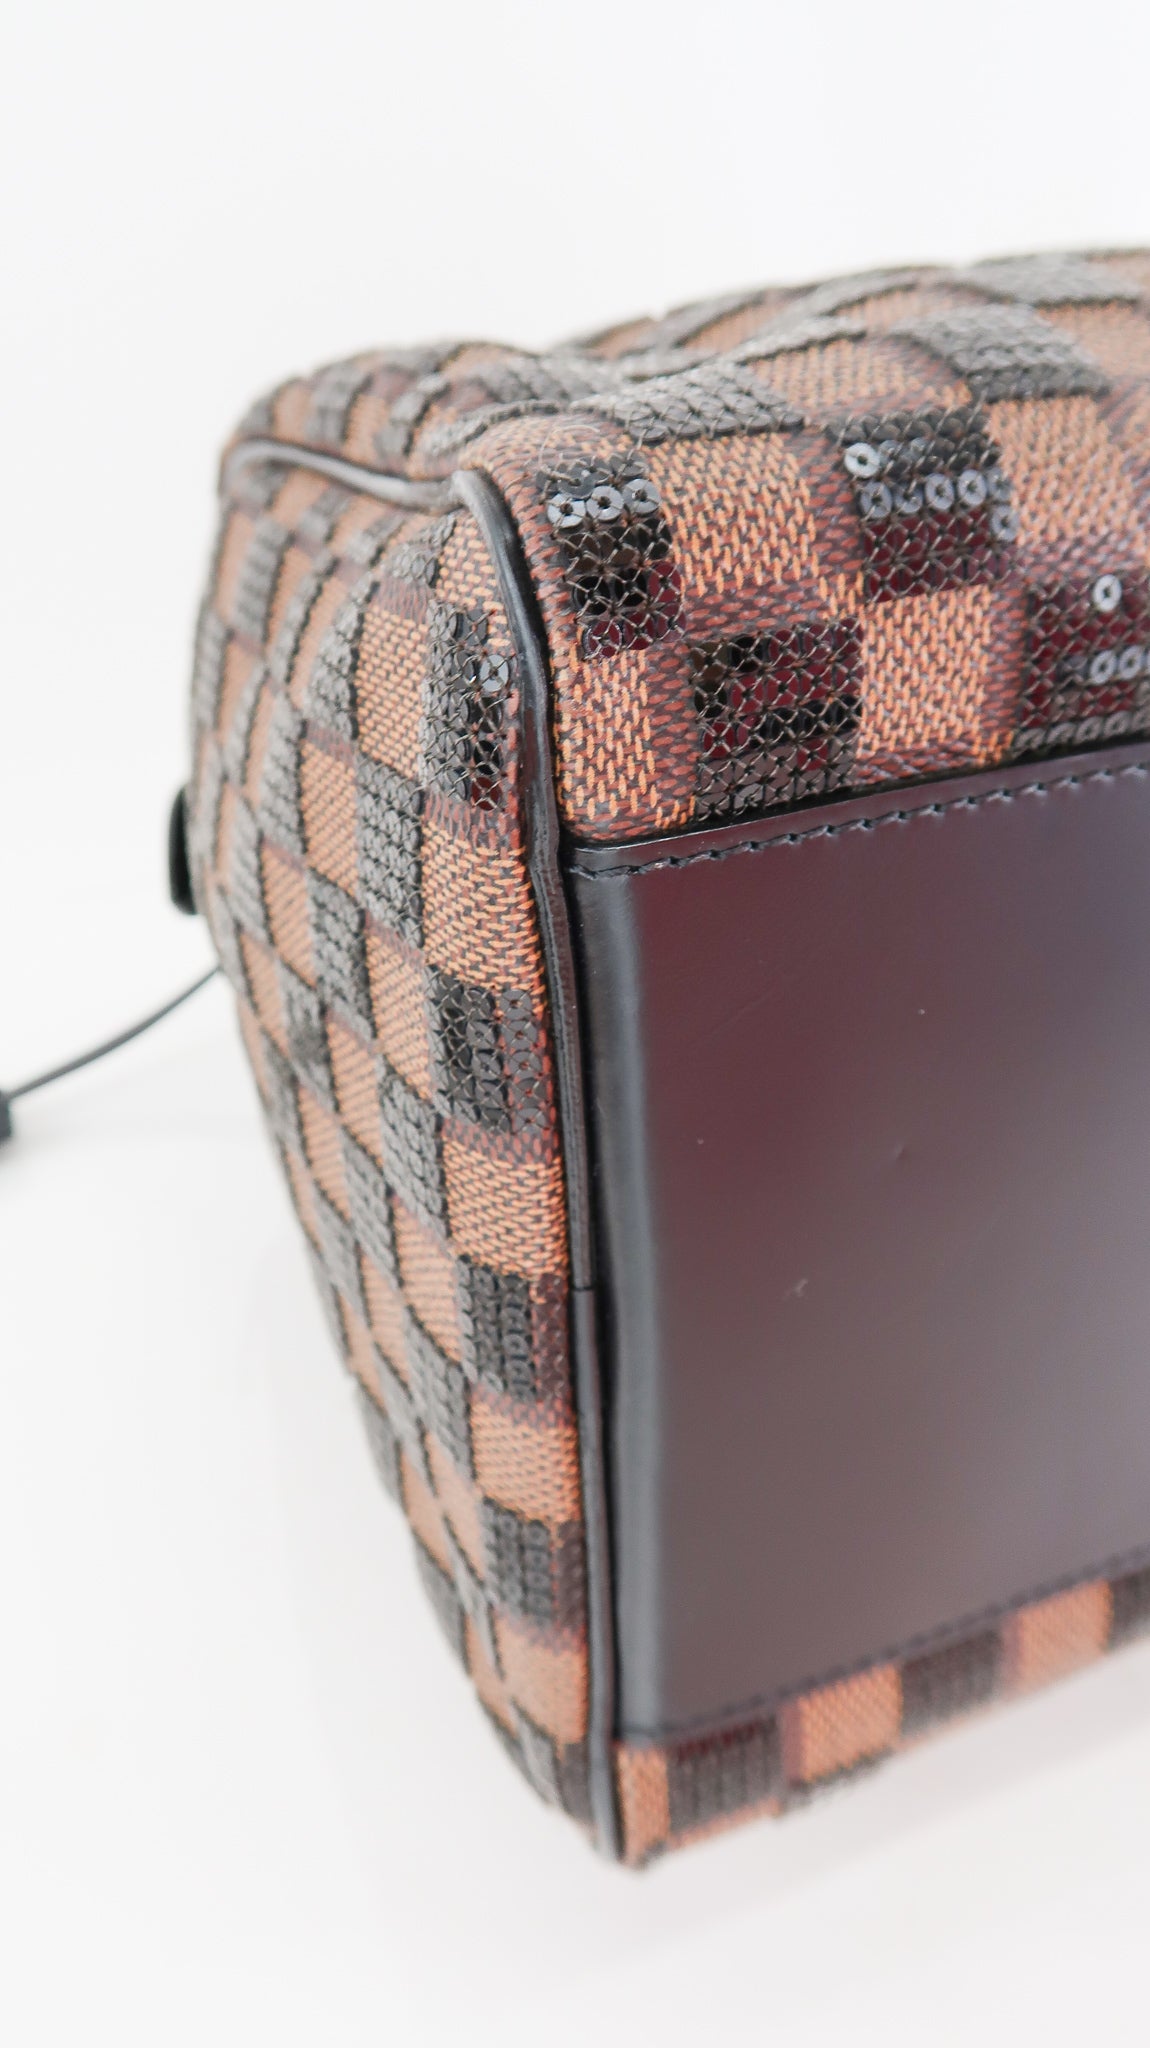 Louis Vuitton Speedy Damier Paillettes 30 Limited Edition Sequined Handbag